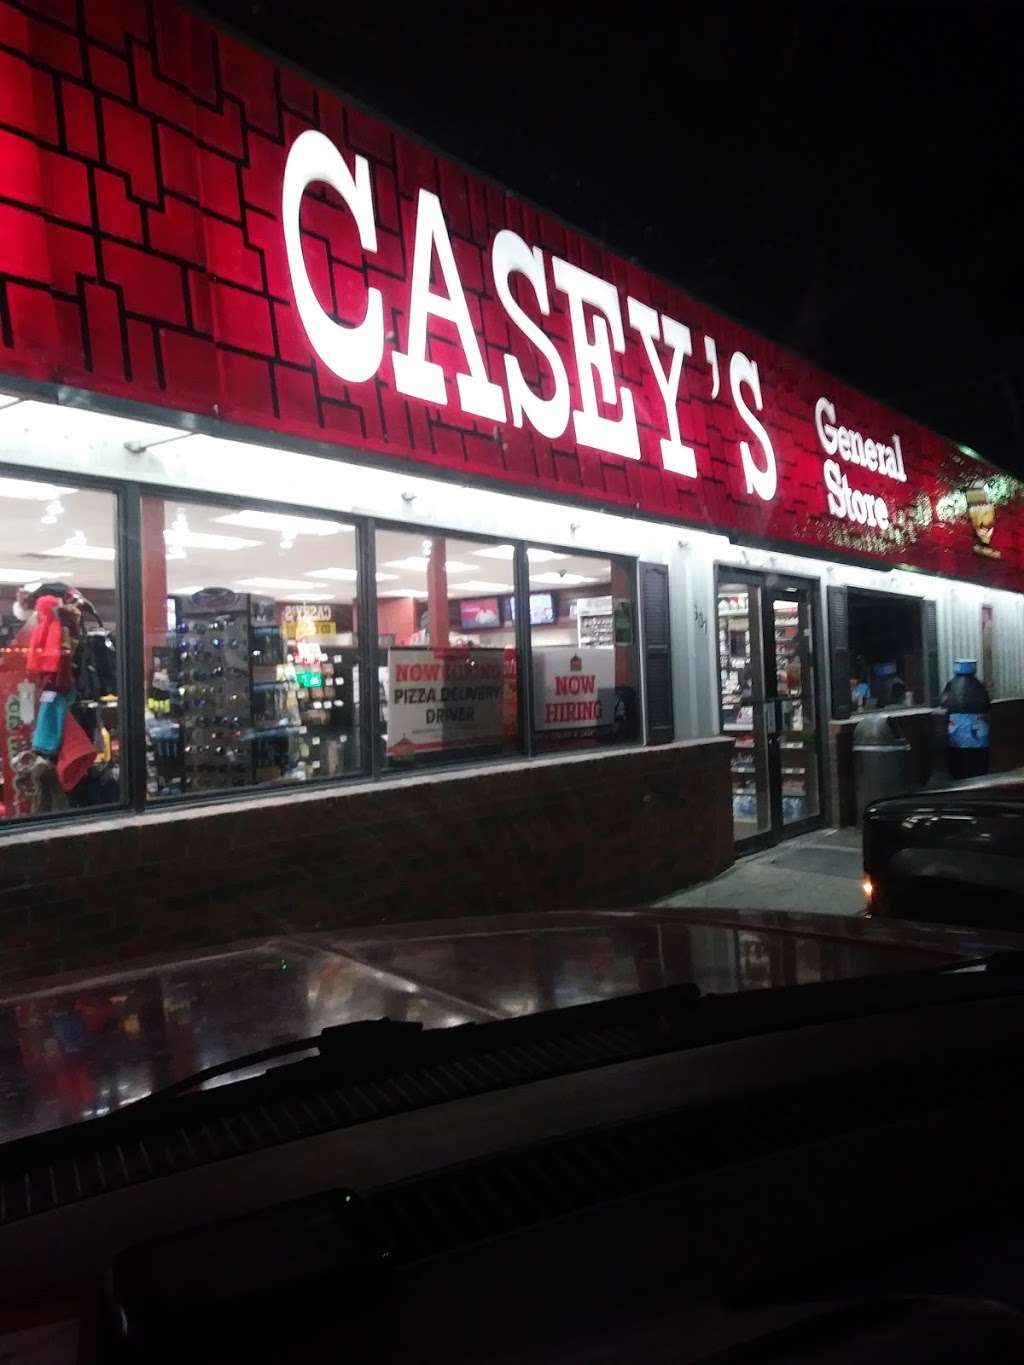 Caseys General Store | 607 N Webster St, Spring Hill, KS 66083 | Phone: (913) 686-2100